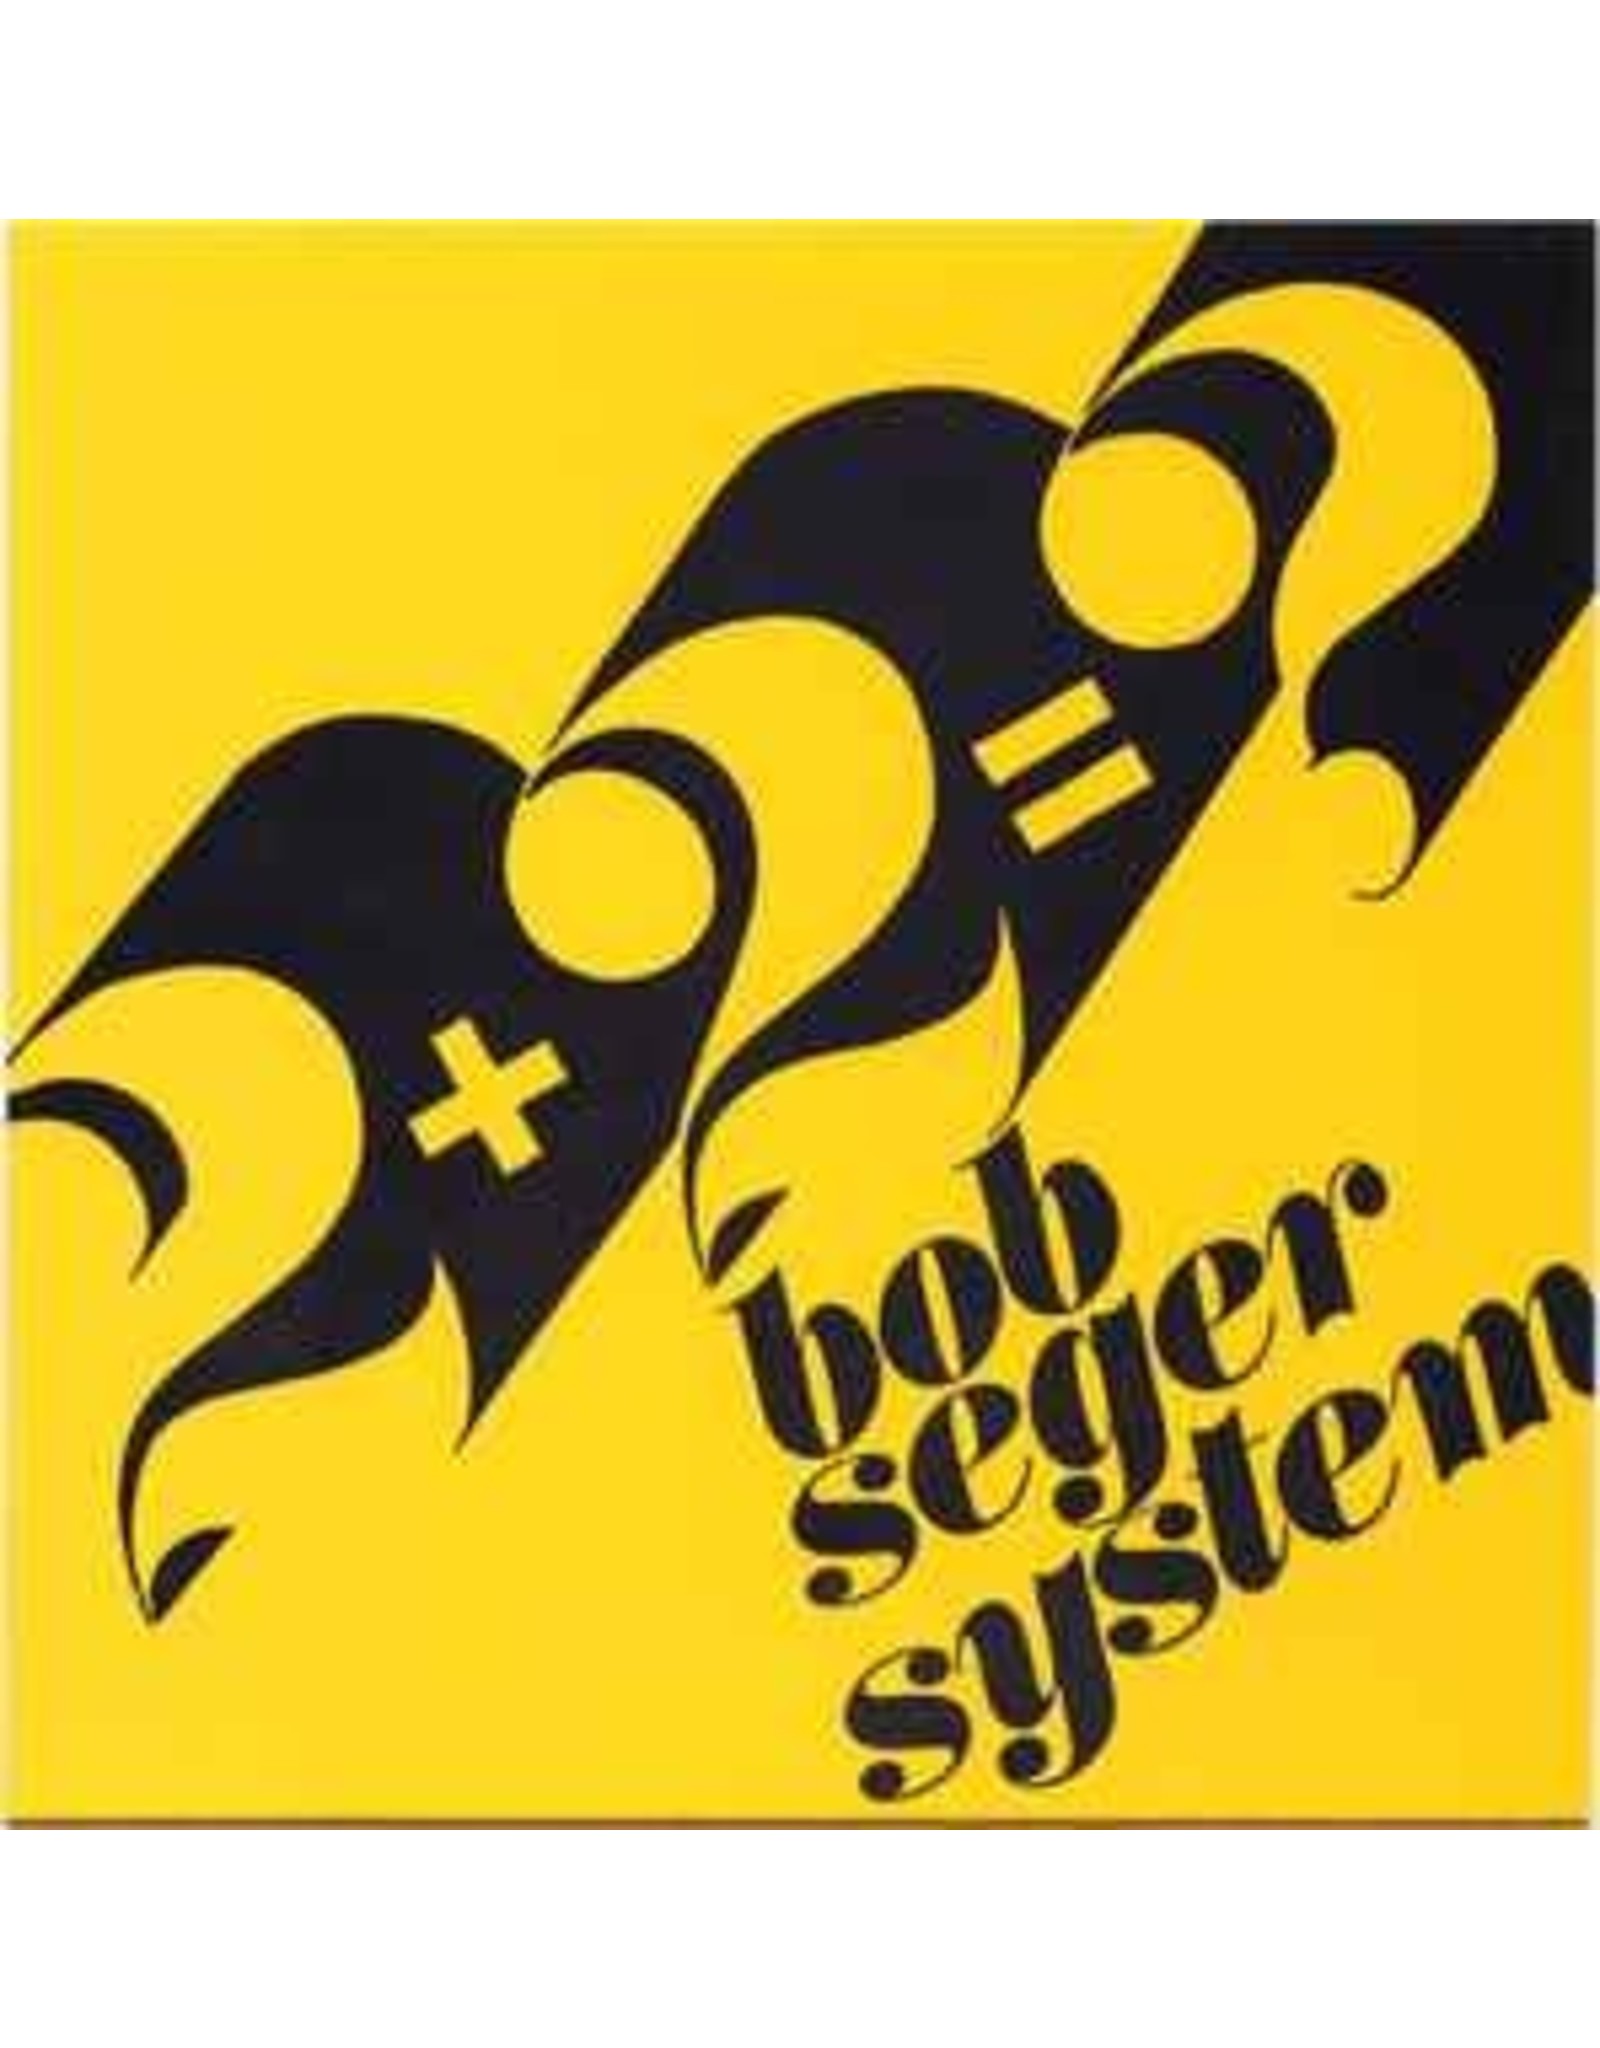 Bob Seger System -  2+ 2 + ?   7"  (yellow vinyl)